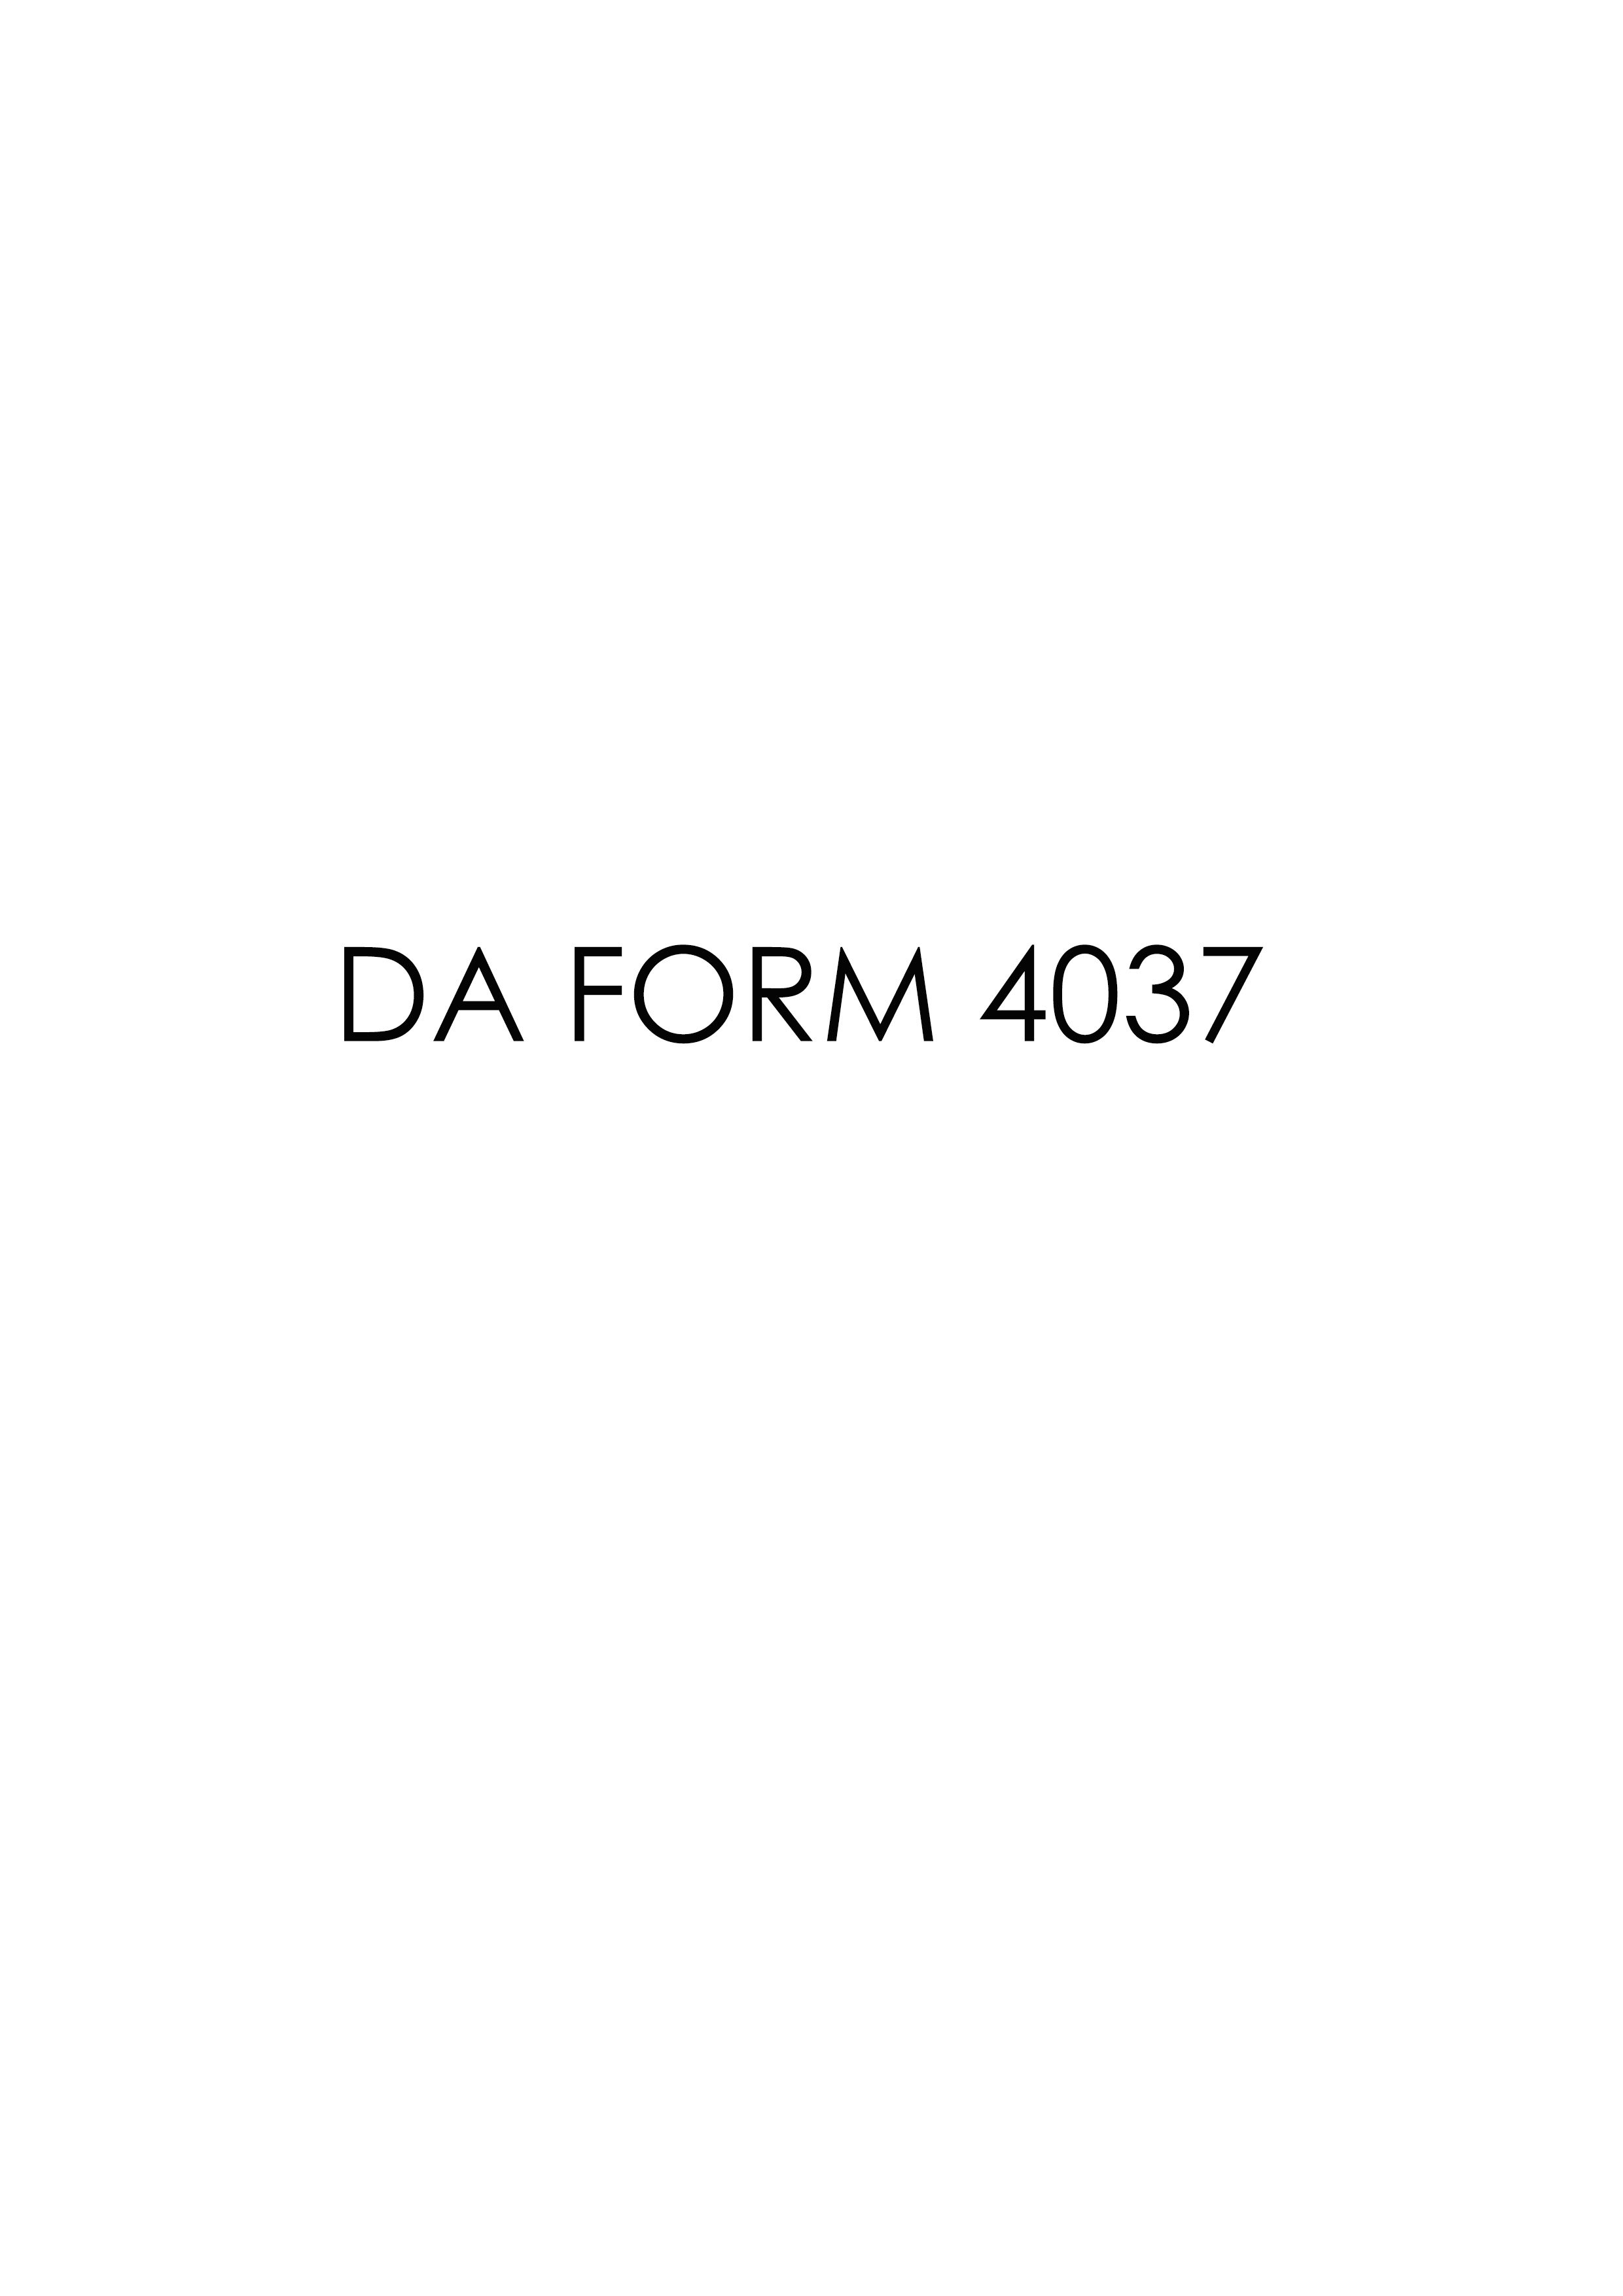 da Form 4037 fillable